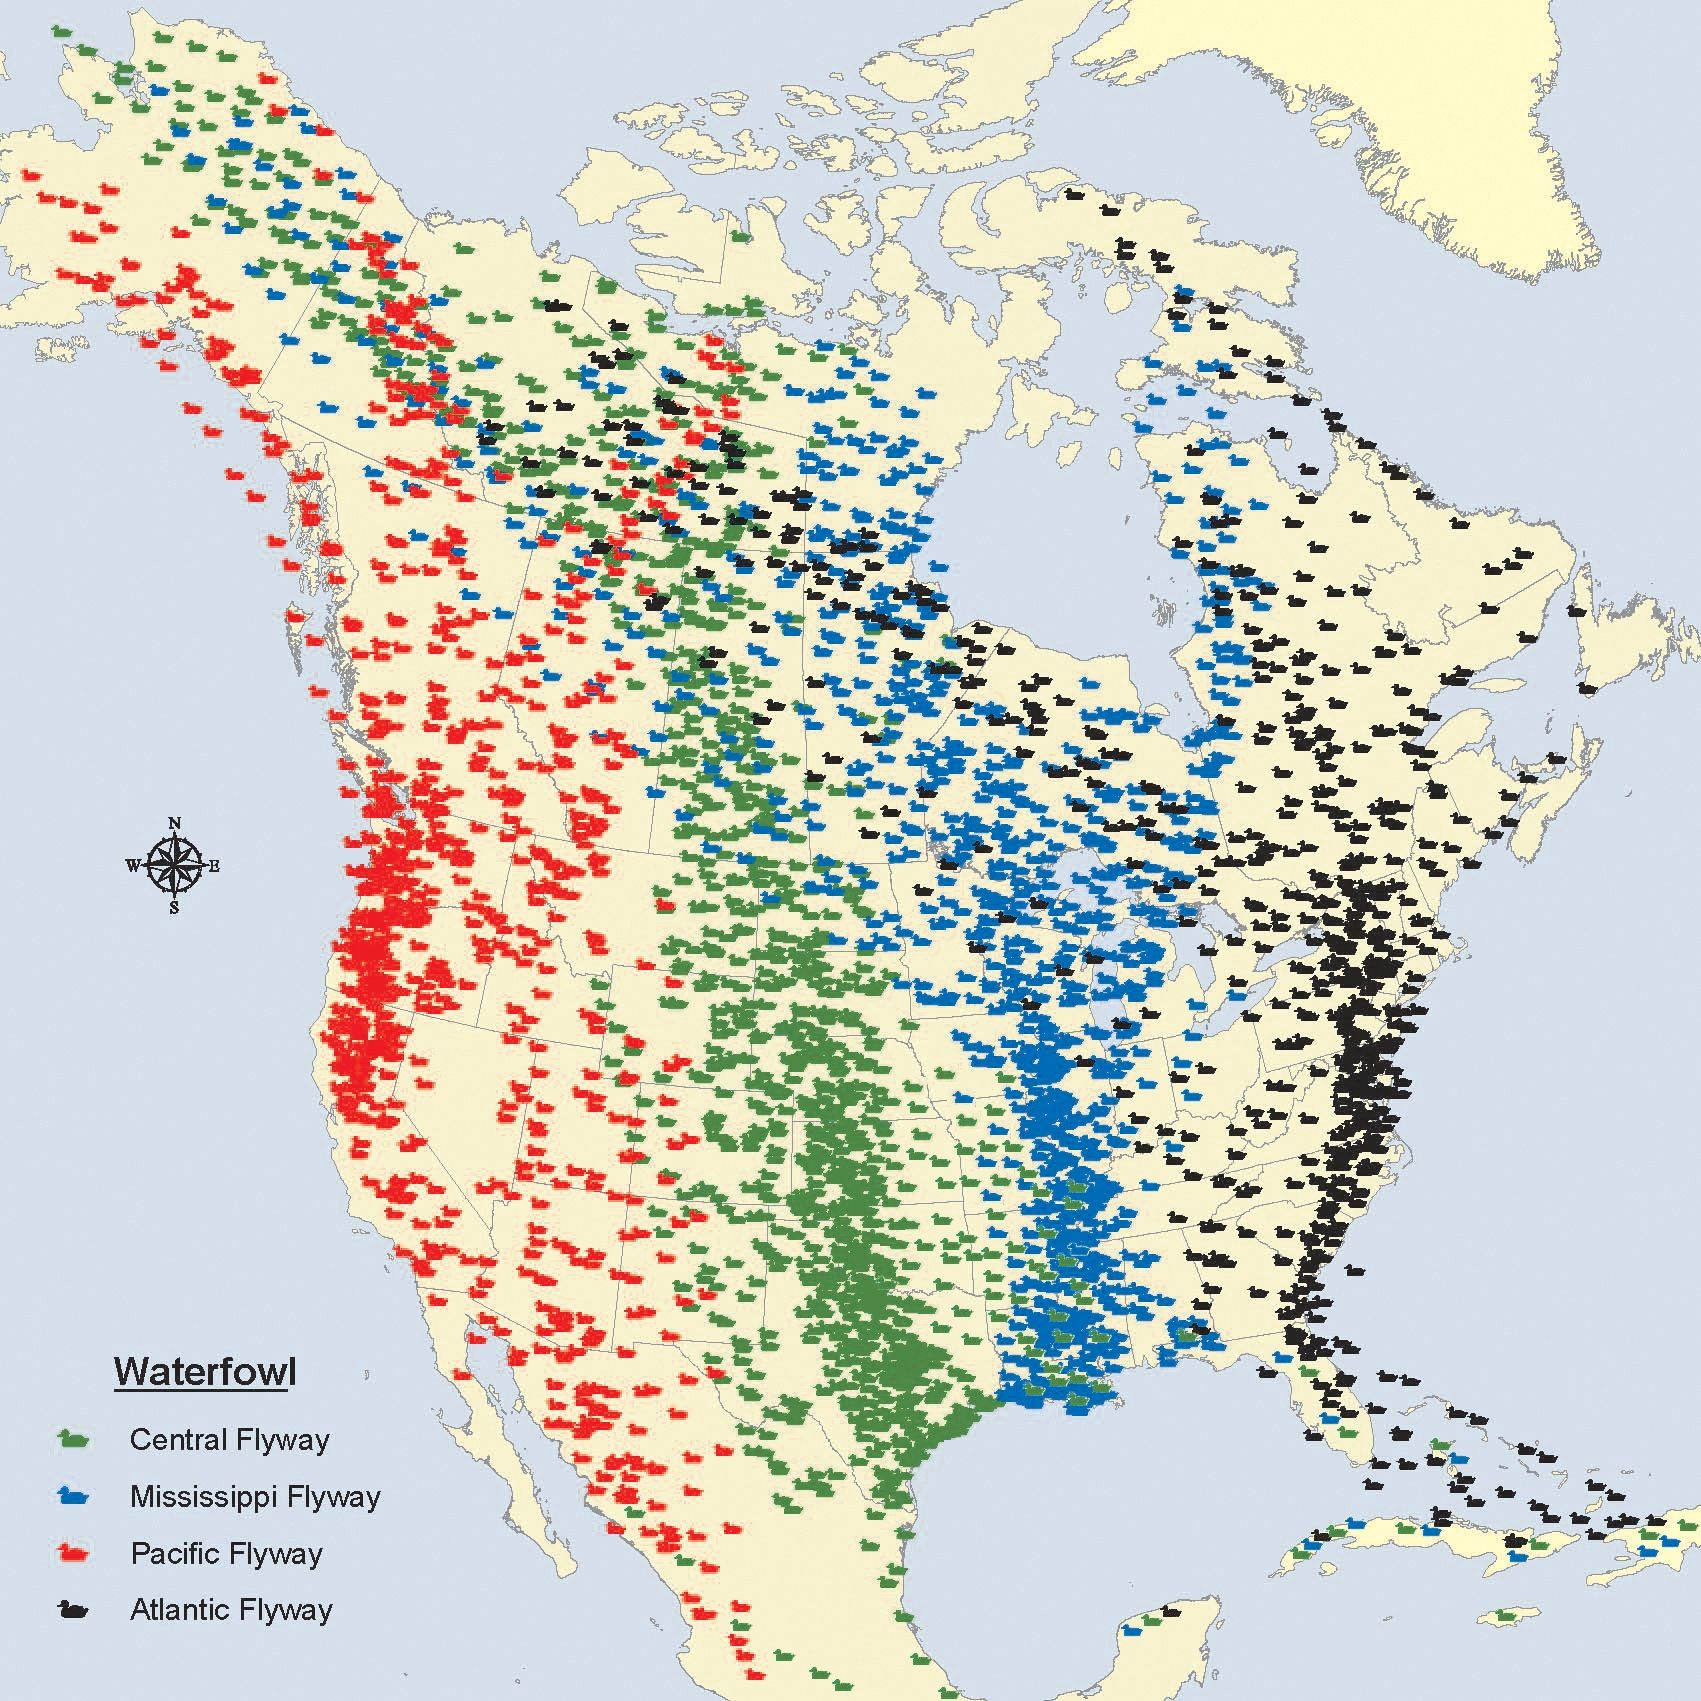 North America has four waterfowl flyways.